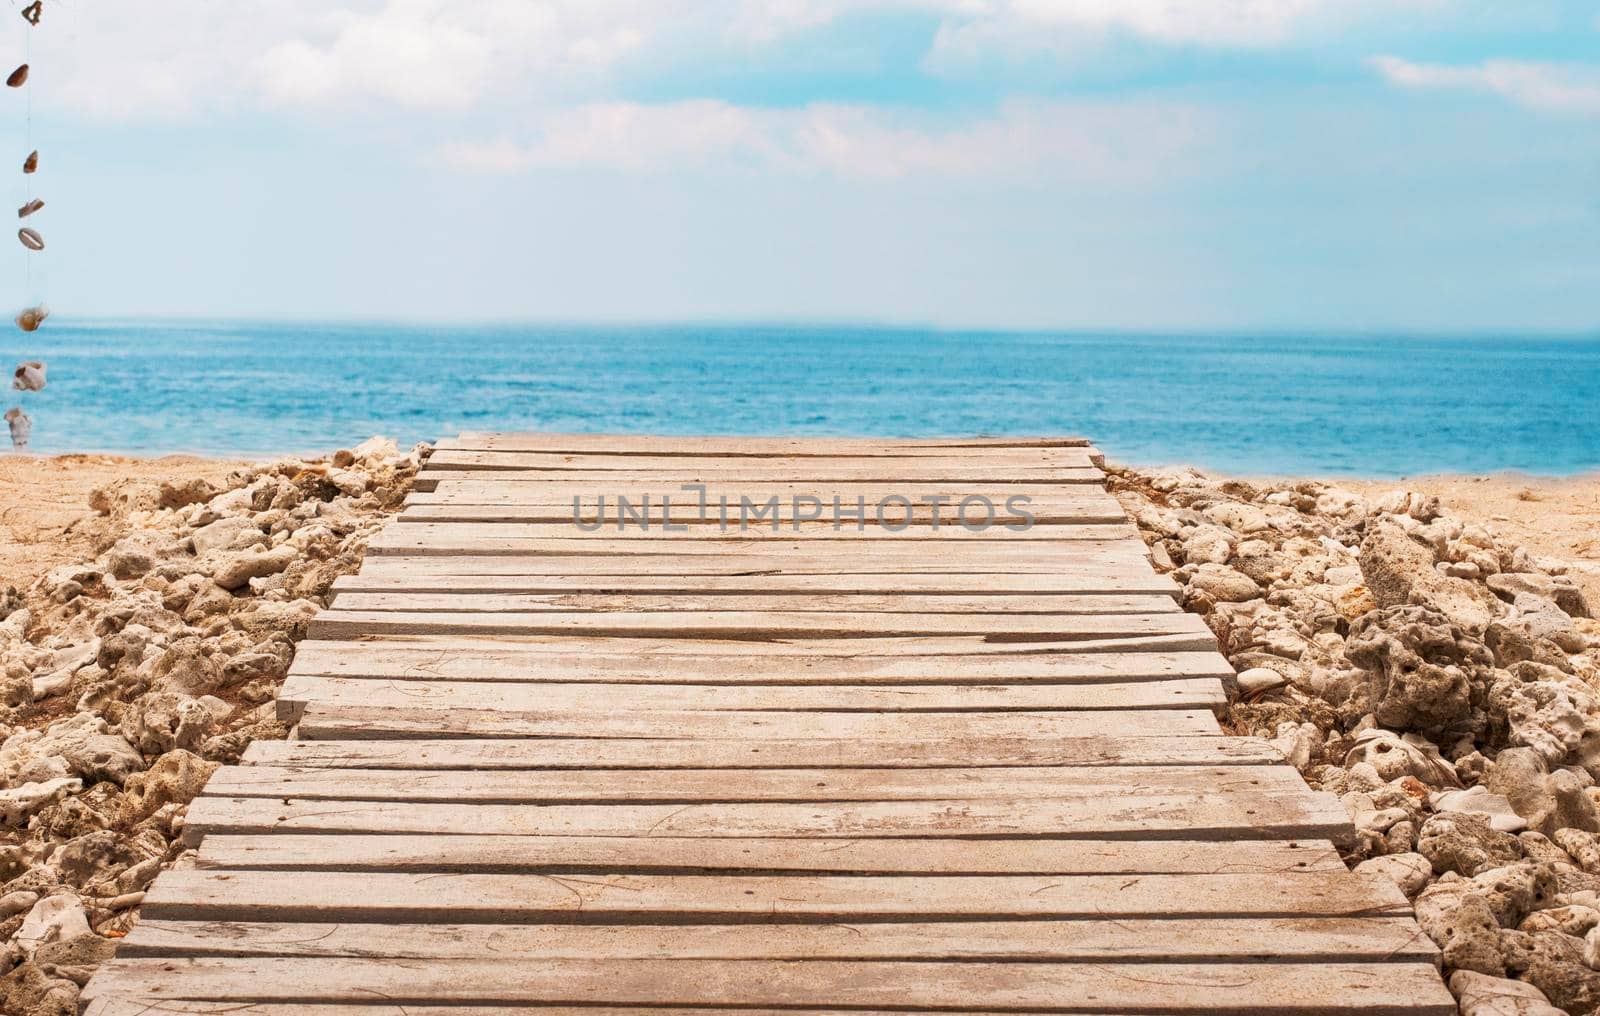 Wooden platform on beach by Jyliana